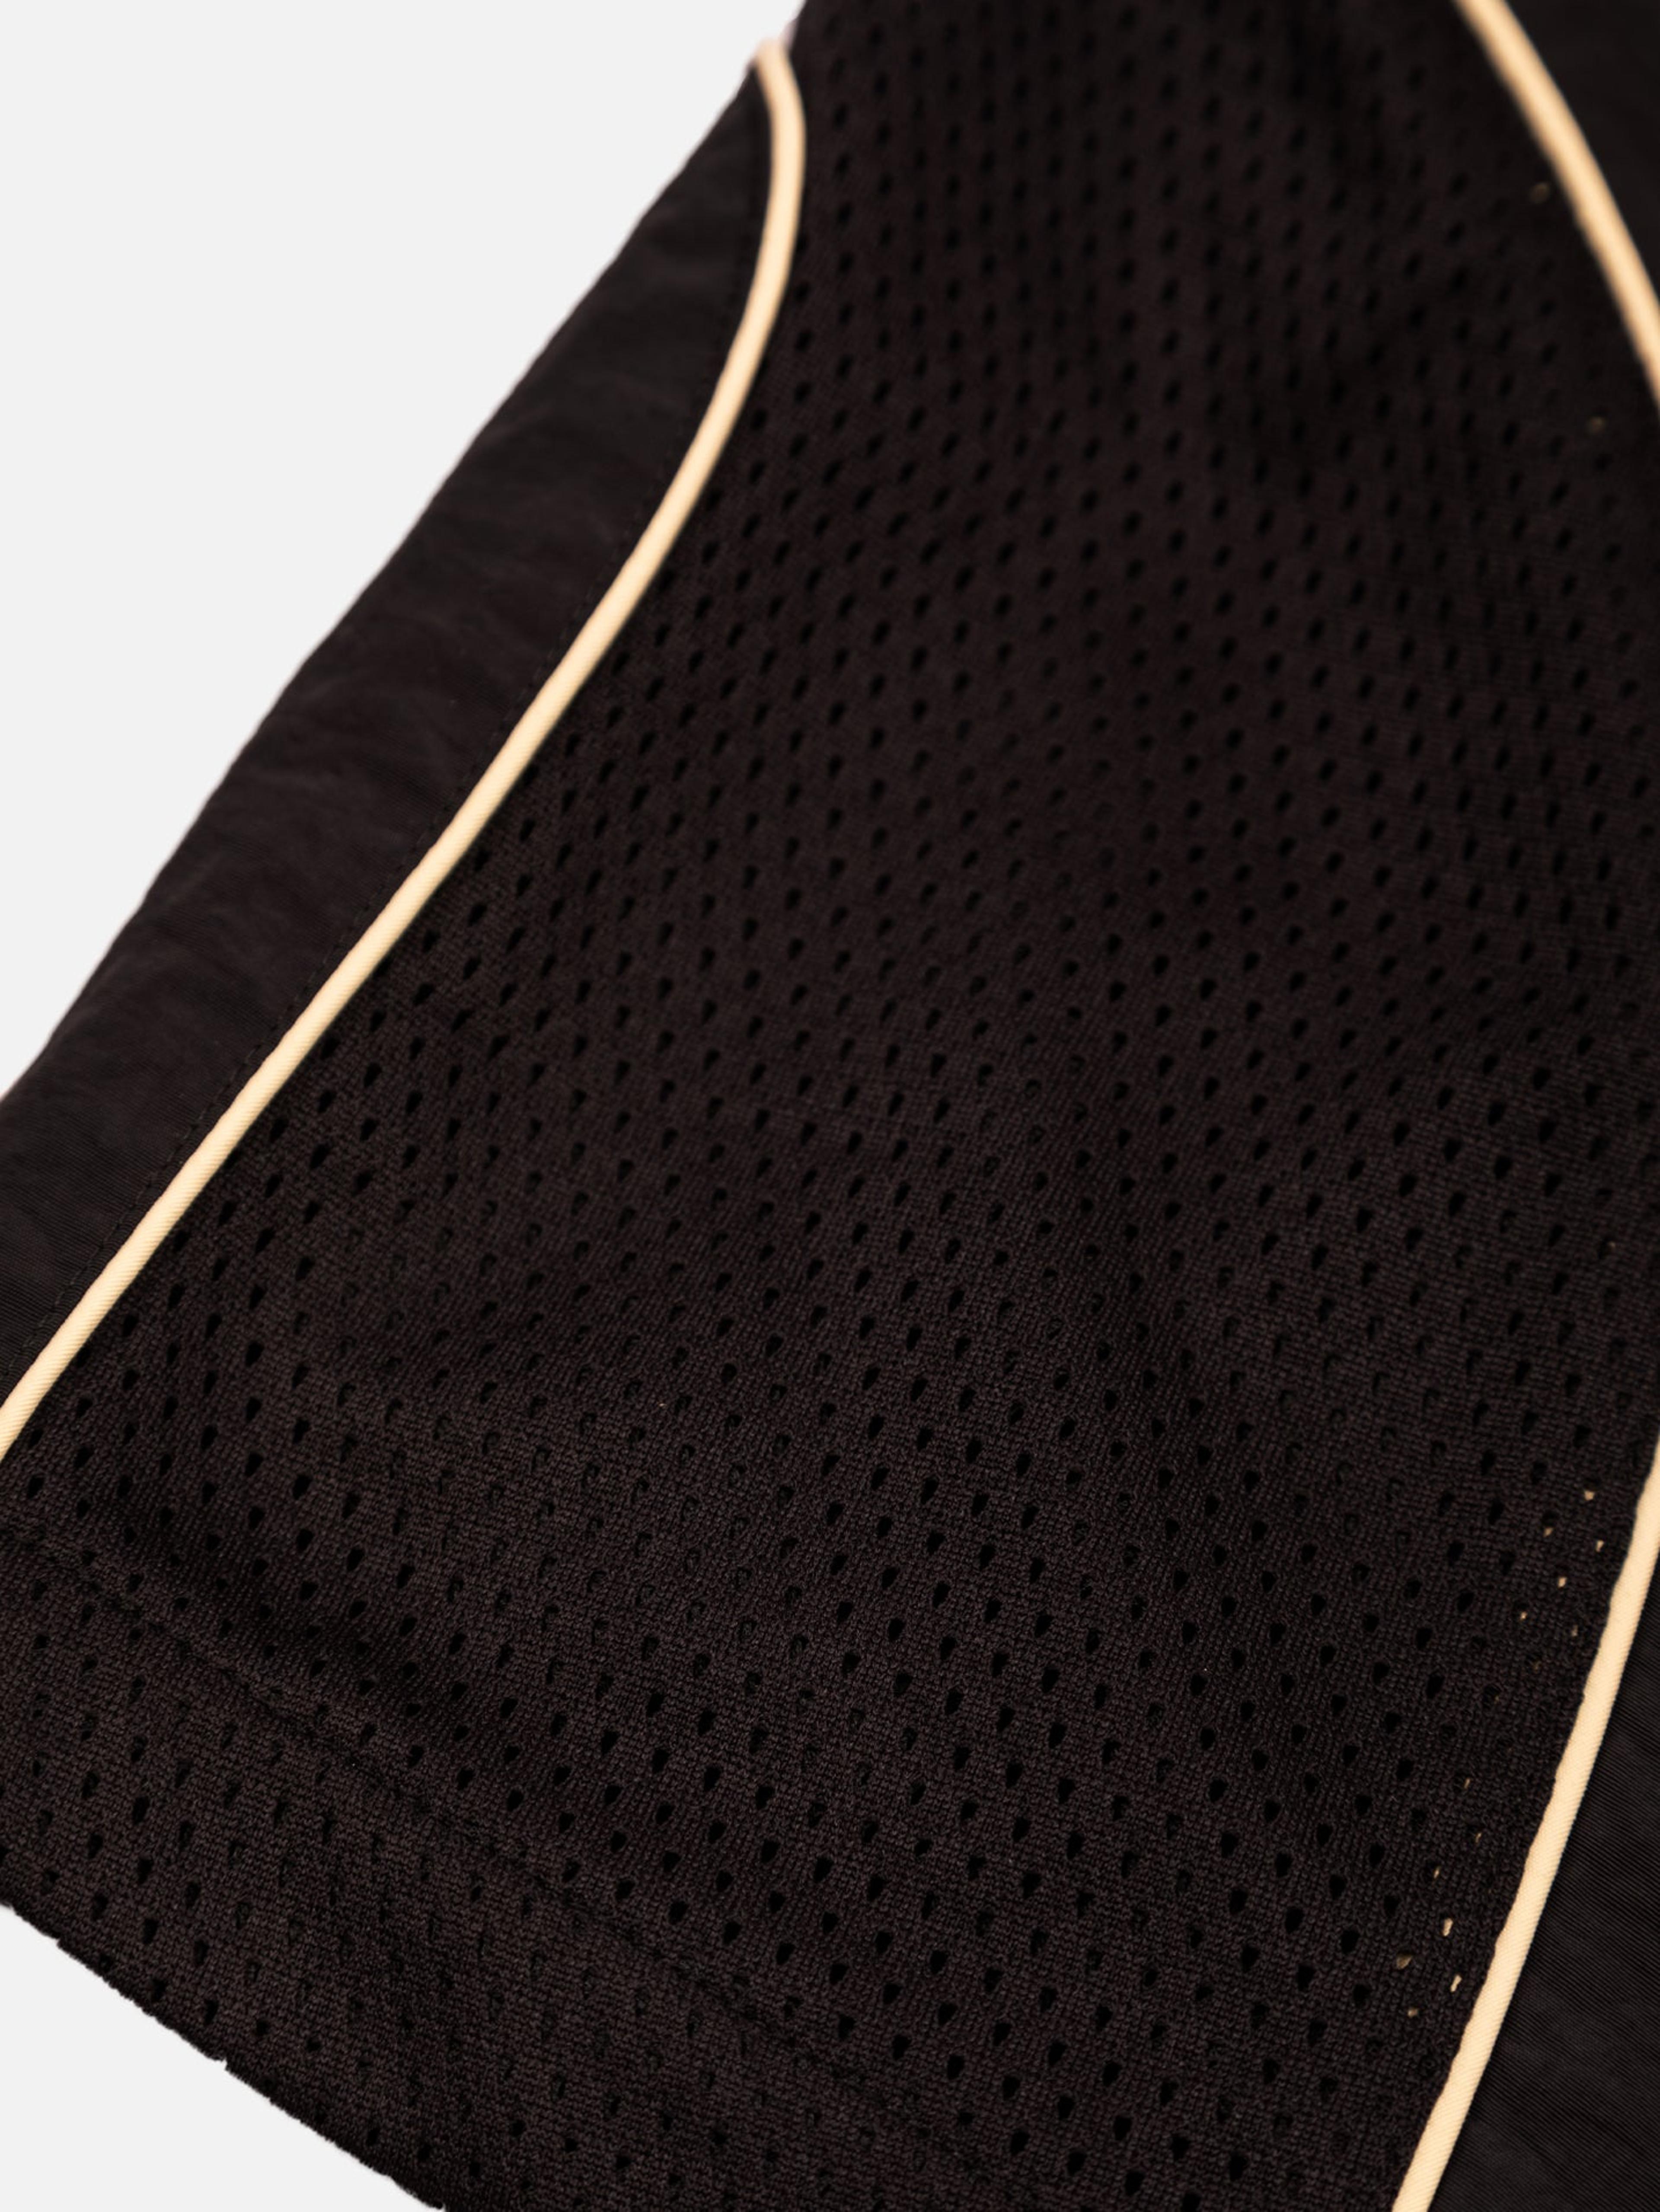 Alternate View 4 of Nylon Half Court Shorts - Black